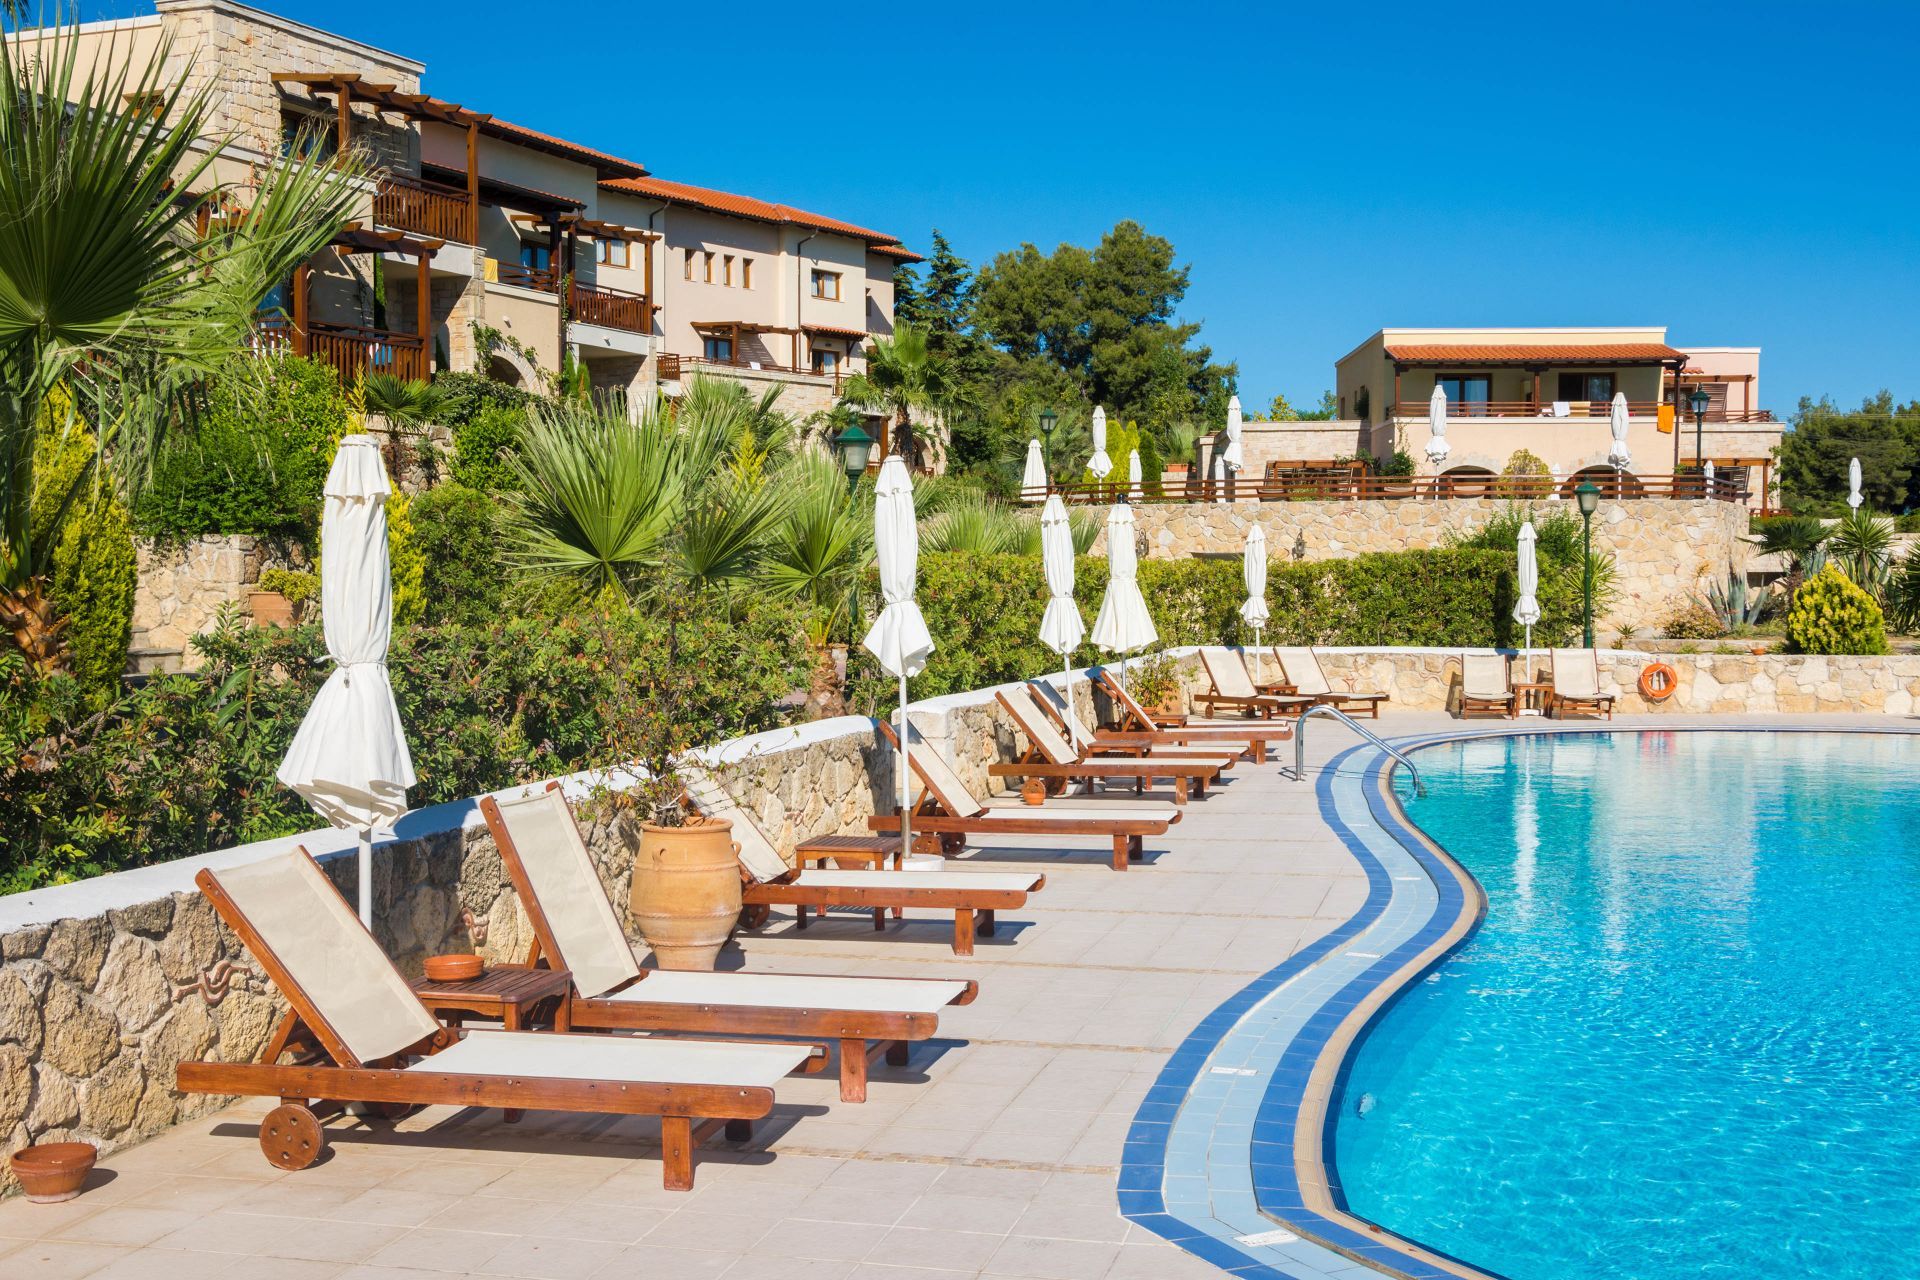 The pool hotel Macedonia in Kallithea, Halkidiki